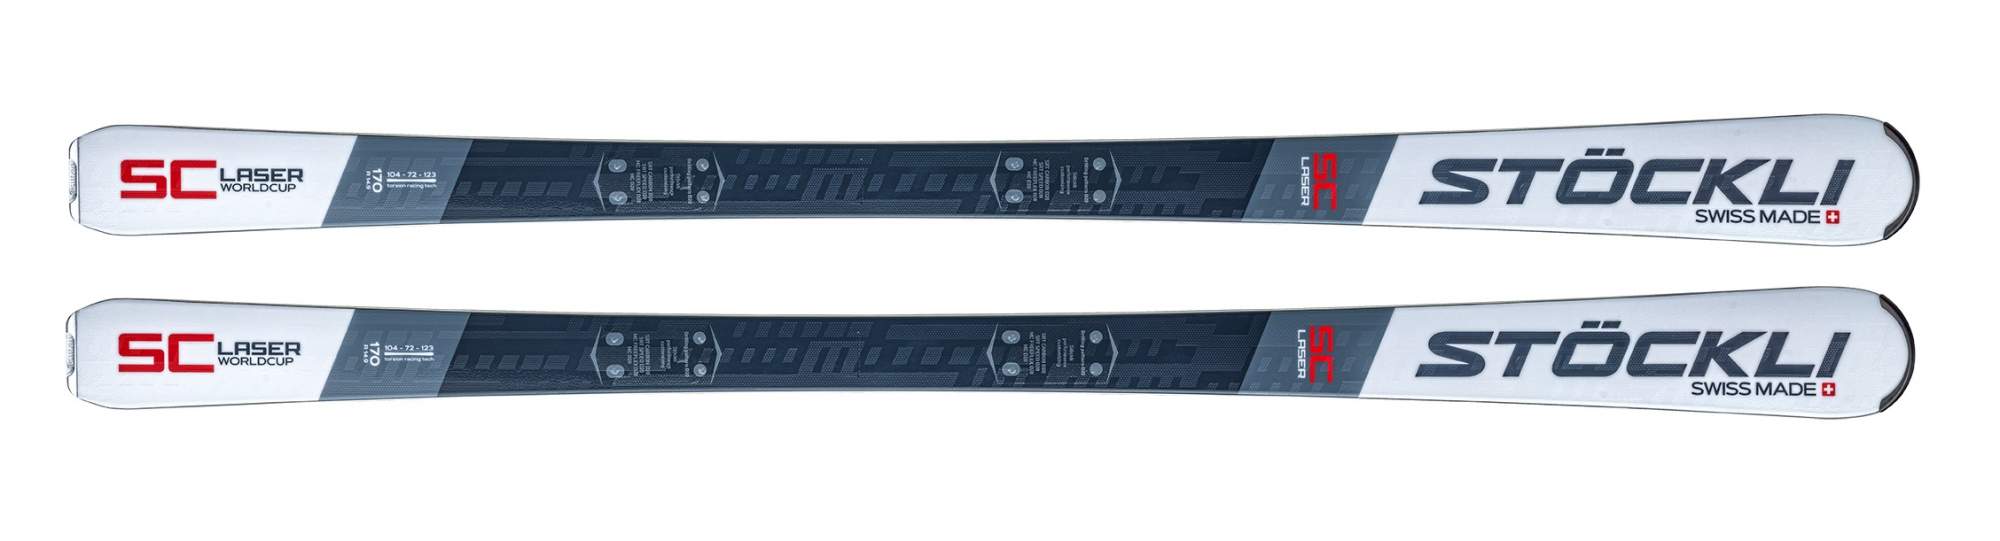 Горные лыжи Stockli Laser SC + MC 11 2022 grey/white, 156 см